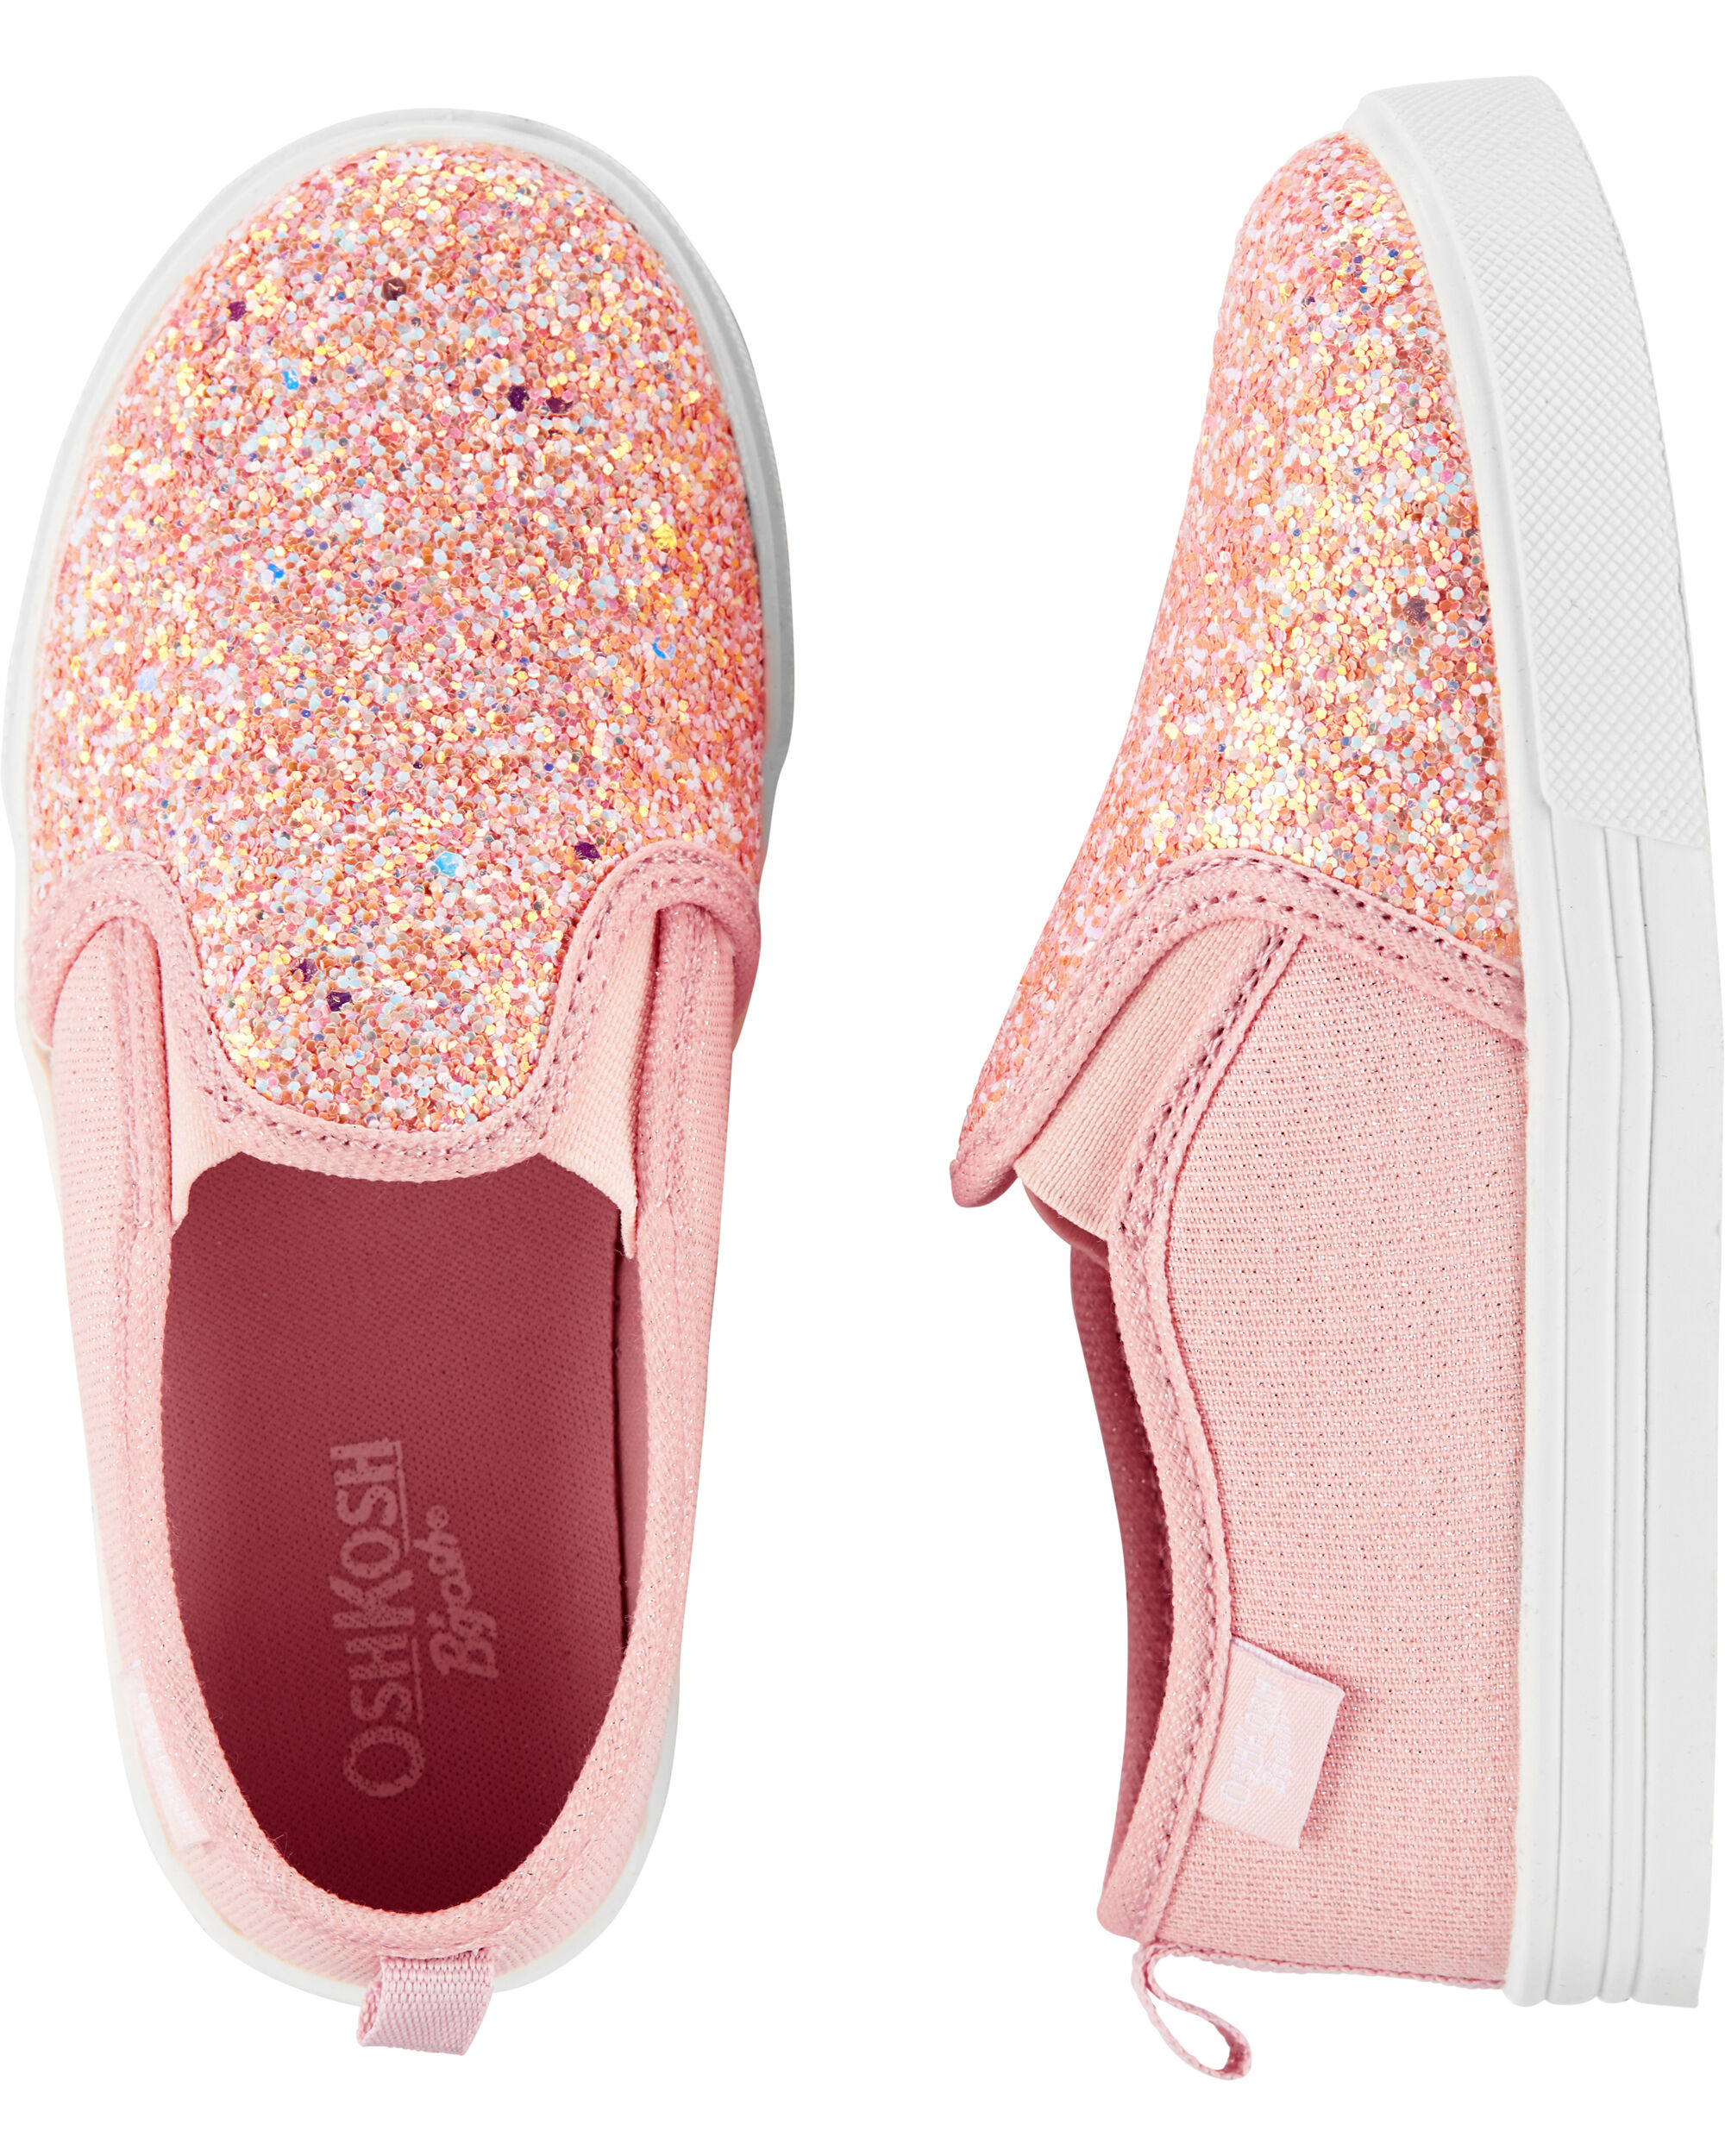 OshKosh Pink Glitter Slip-On Shoes 